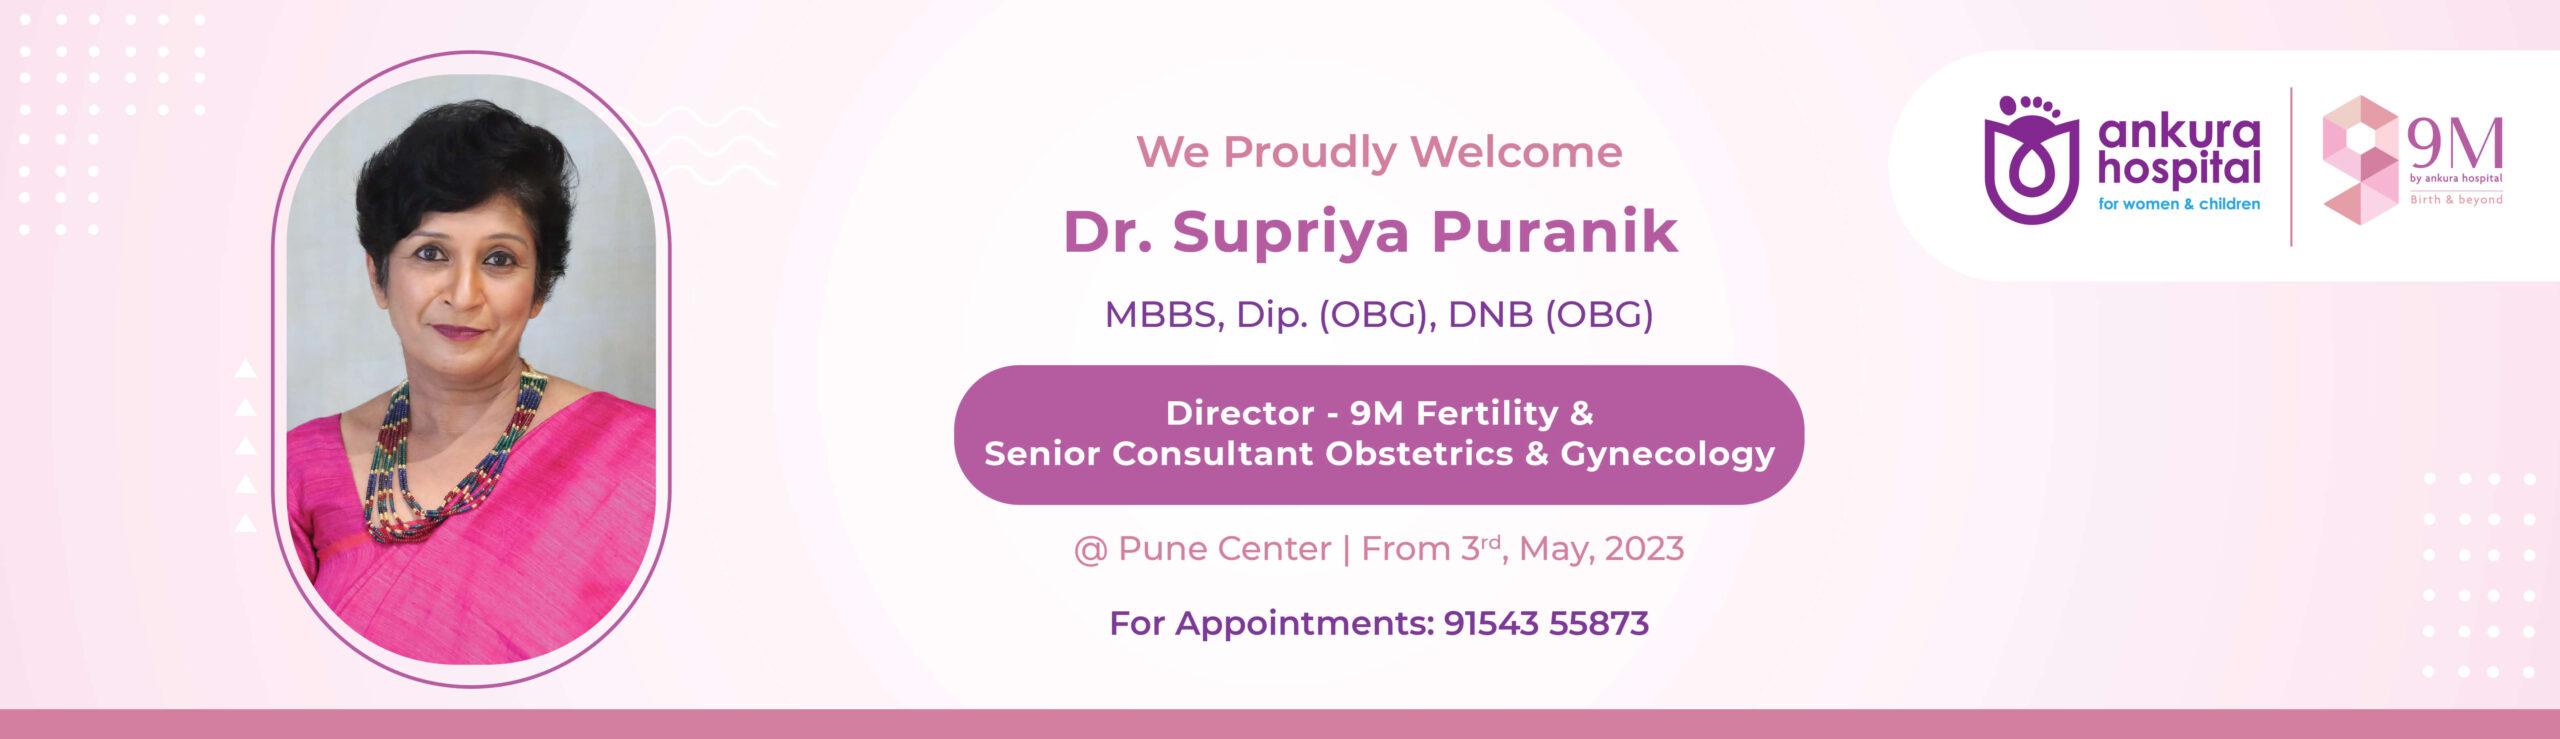 Dr Supriya Puranik slide